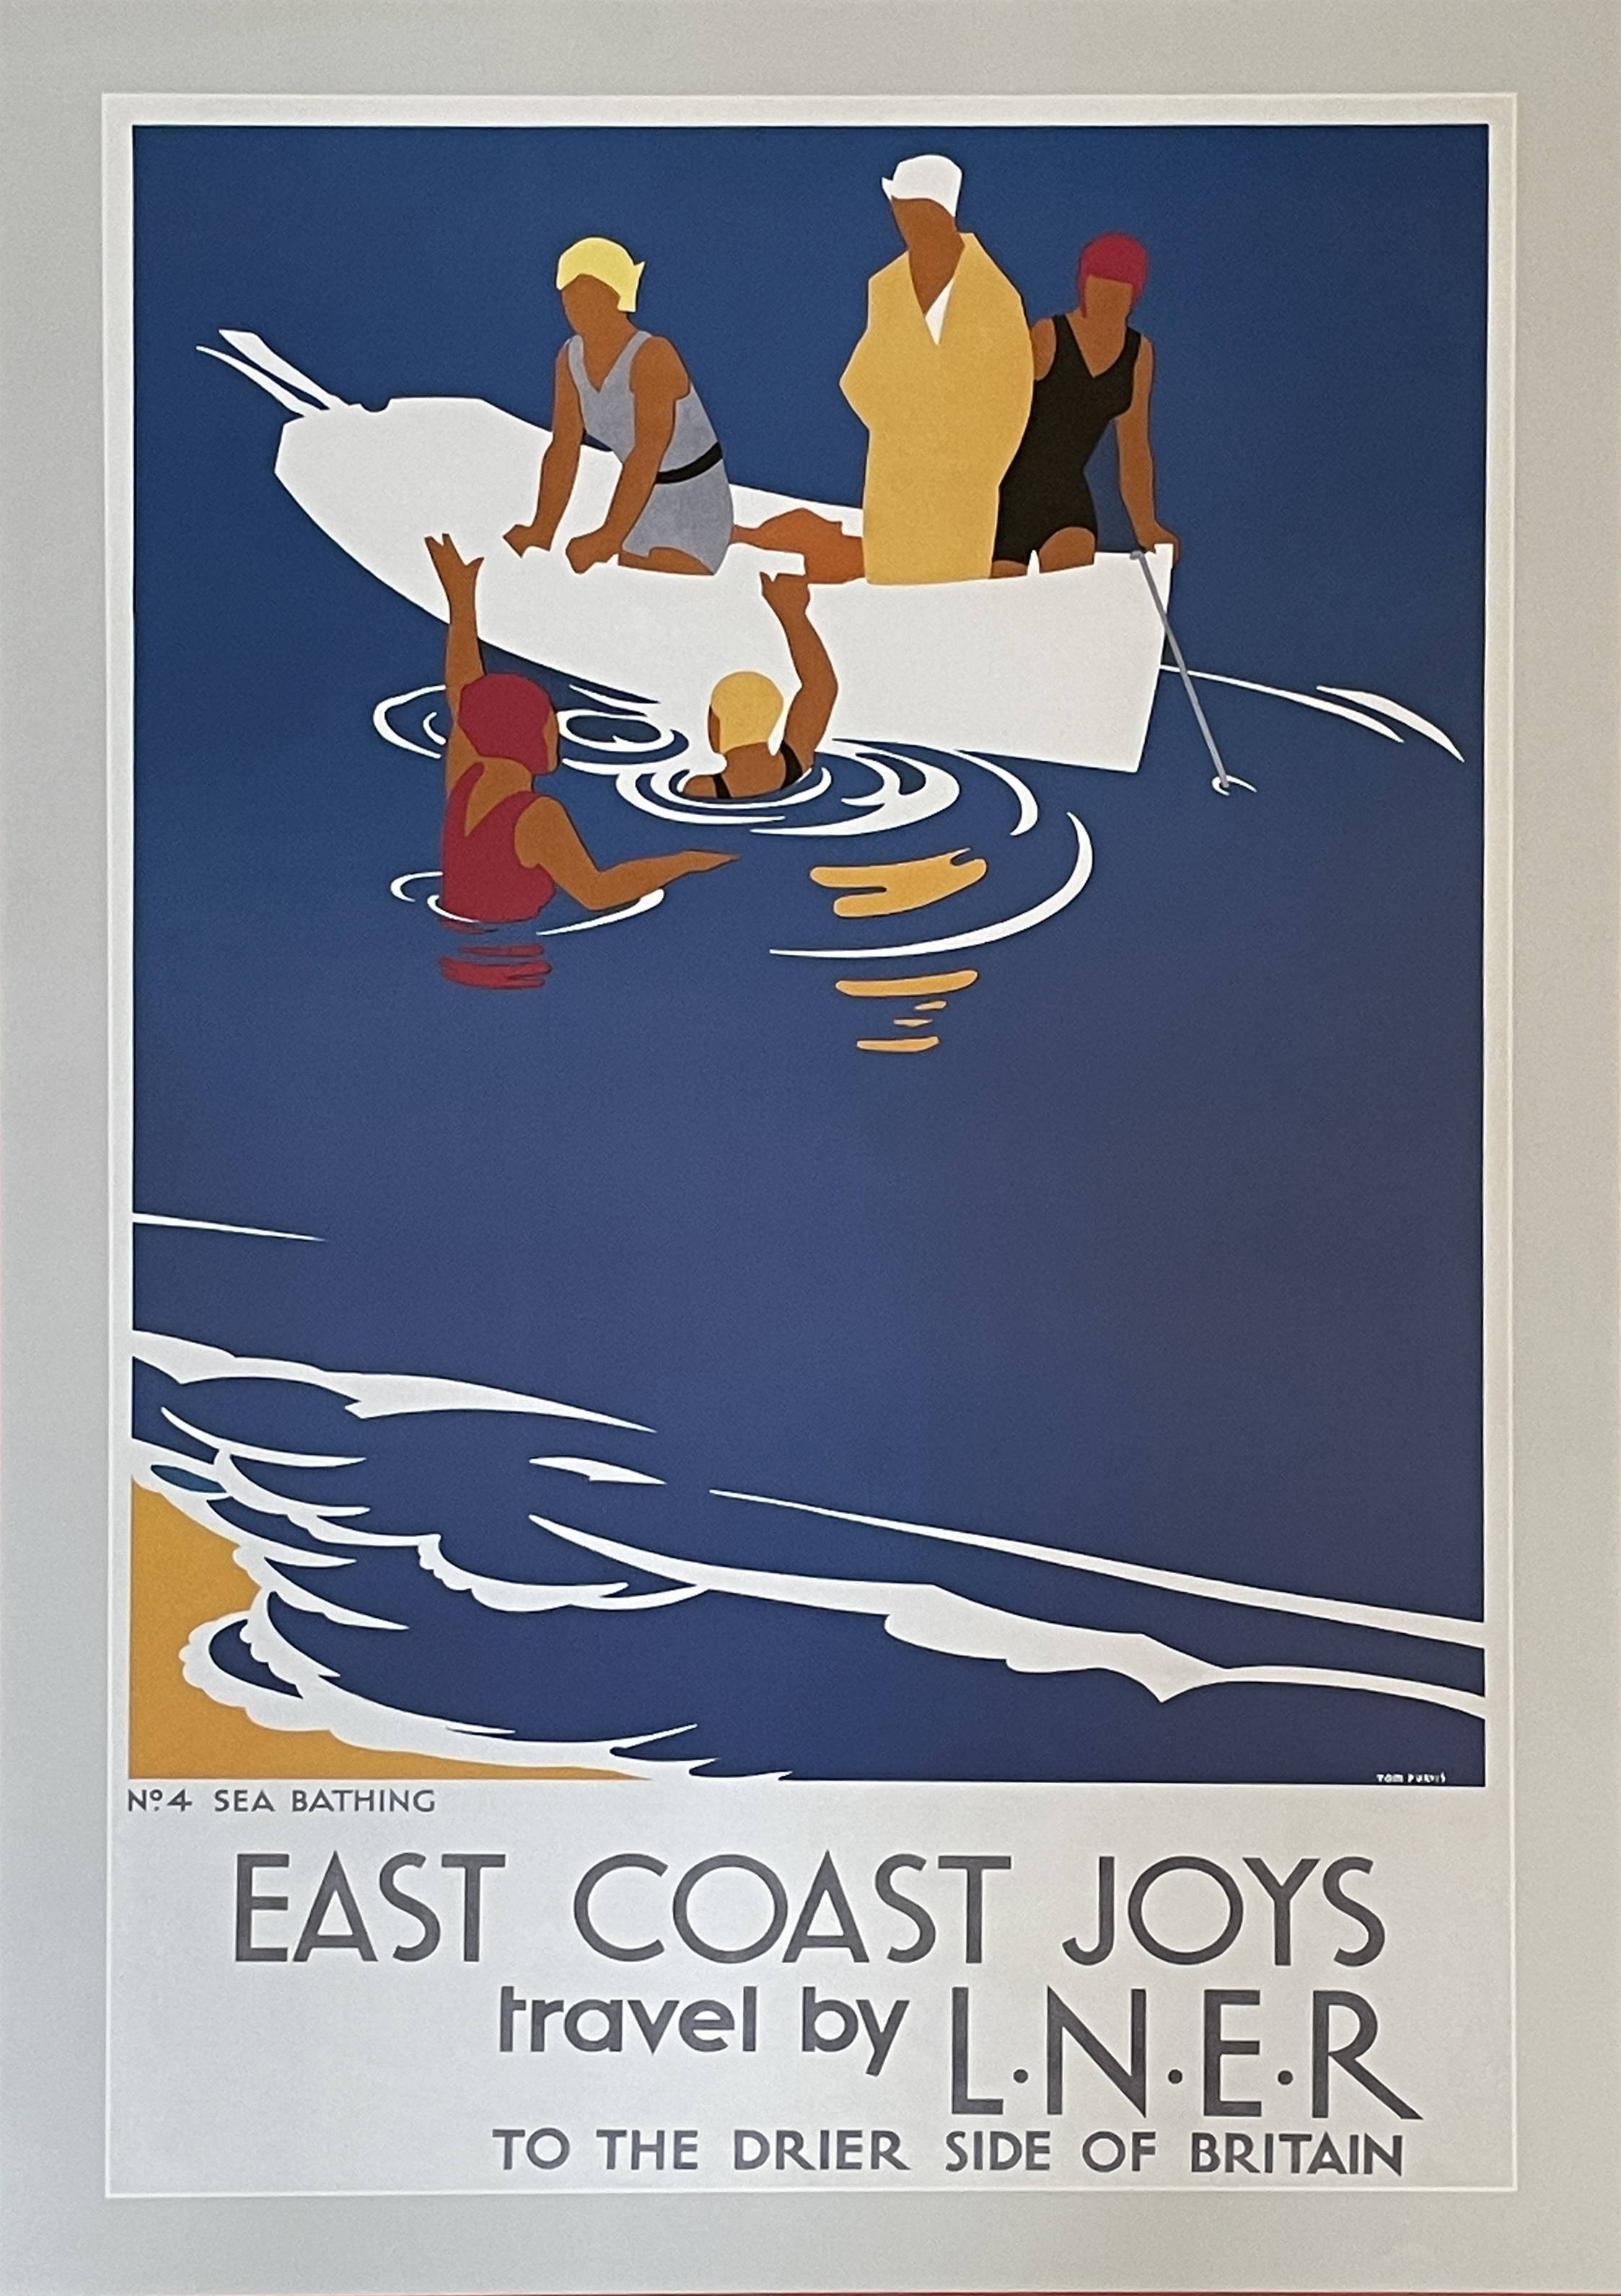 East Coast Joys - Travel by LNER